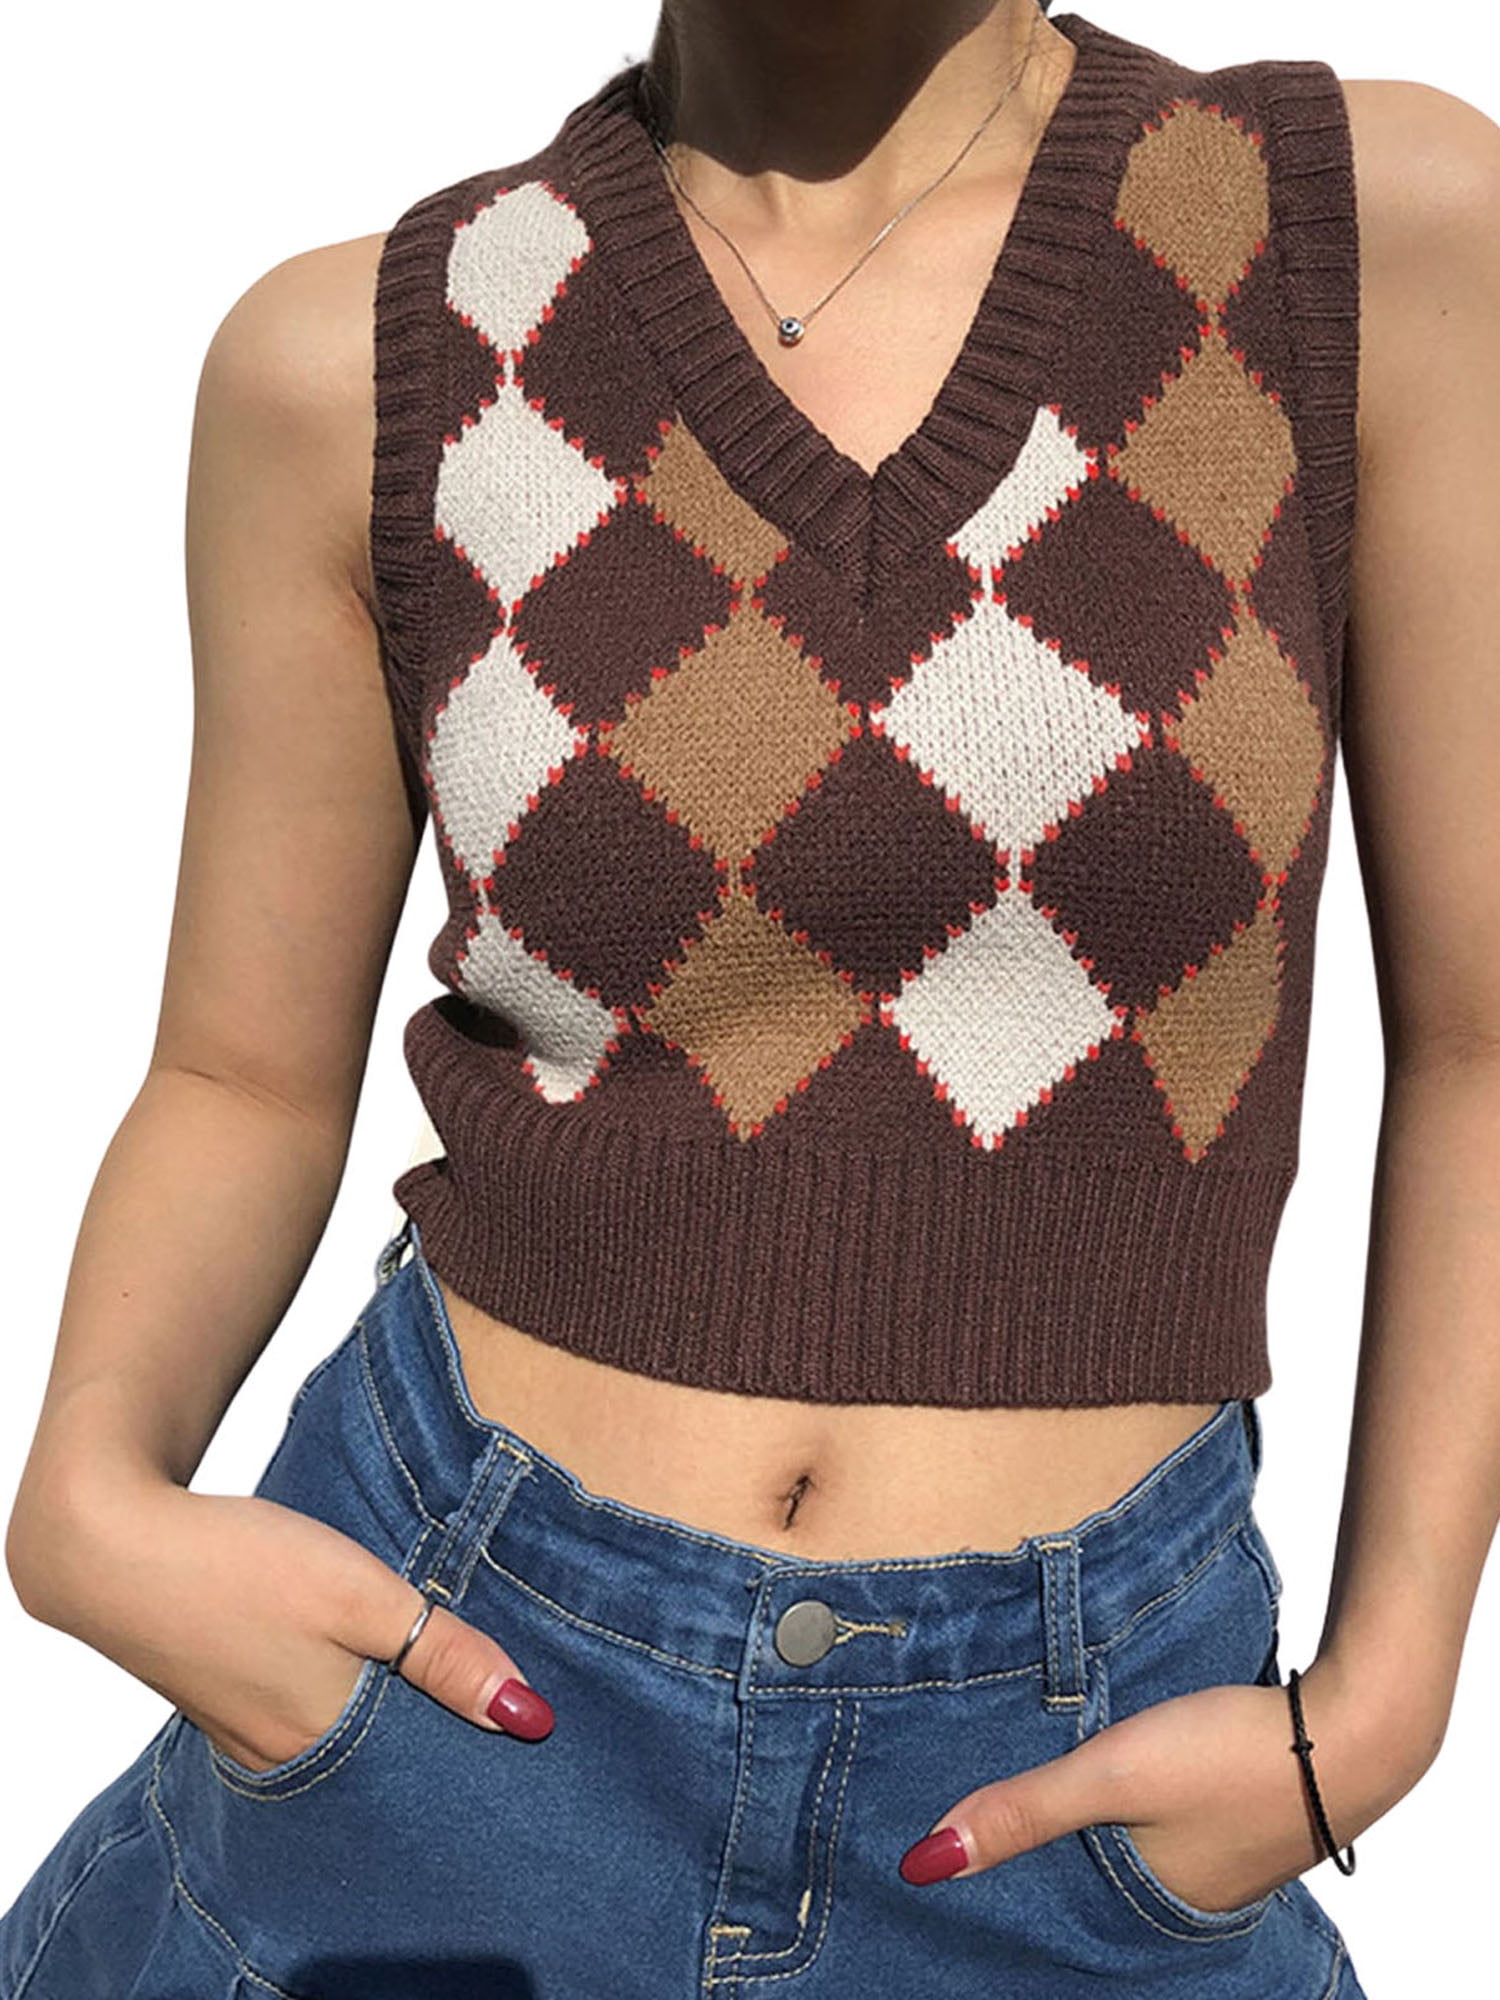 SheIn Women's V Neck Plaid Print Sweater Vest Sleeveless Rib-Knit Crop Tank Tops 